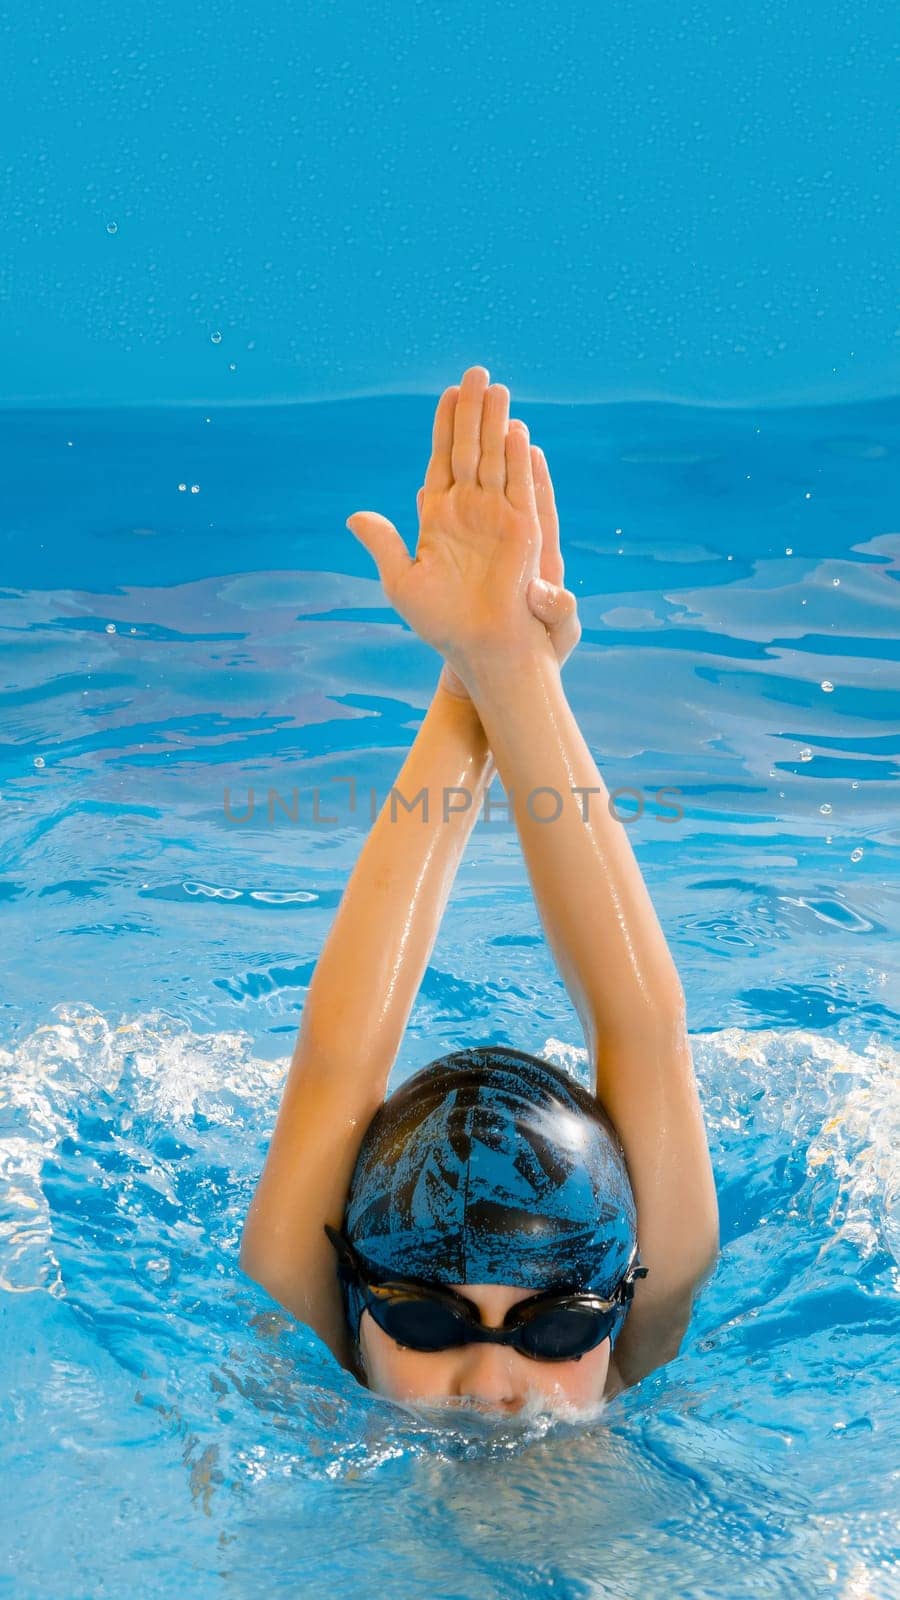 Boy swimming in indoor pool having fun during swim class by Mariakray